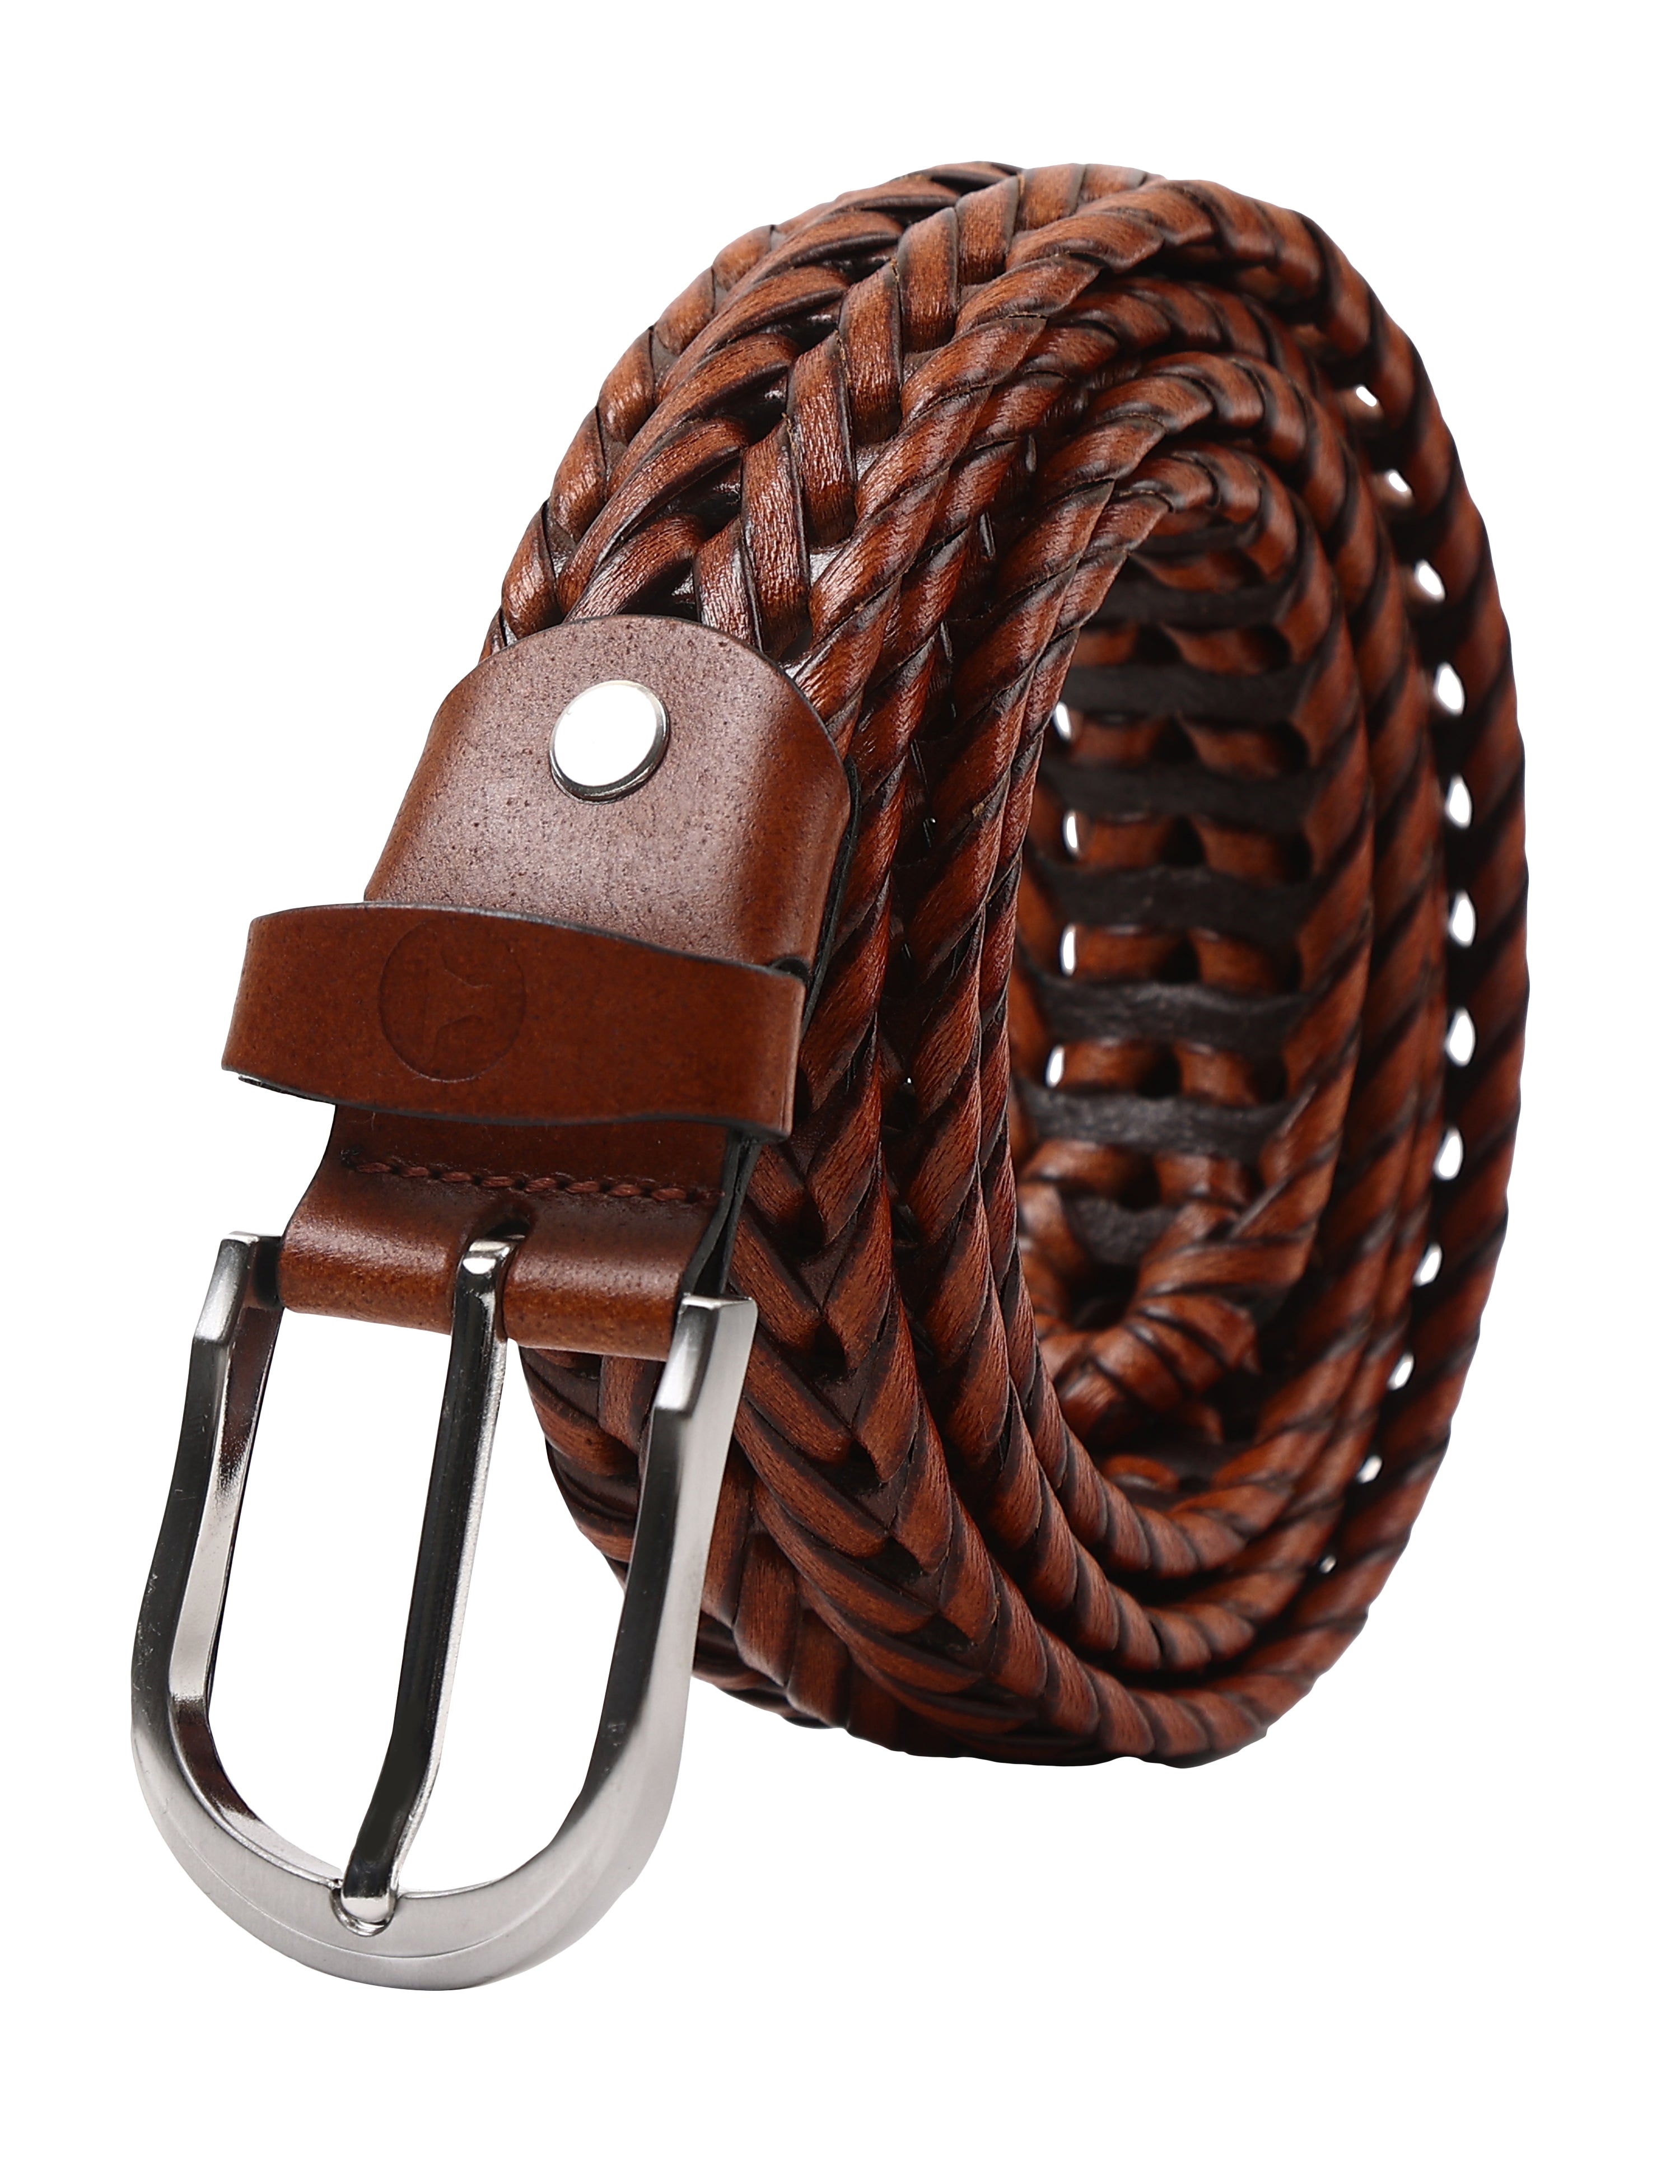 Bulchee Men's Collection, Genuine Leather Braided Belt in Tan